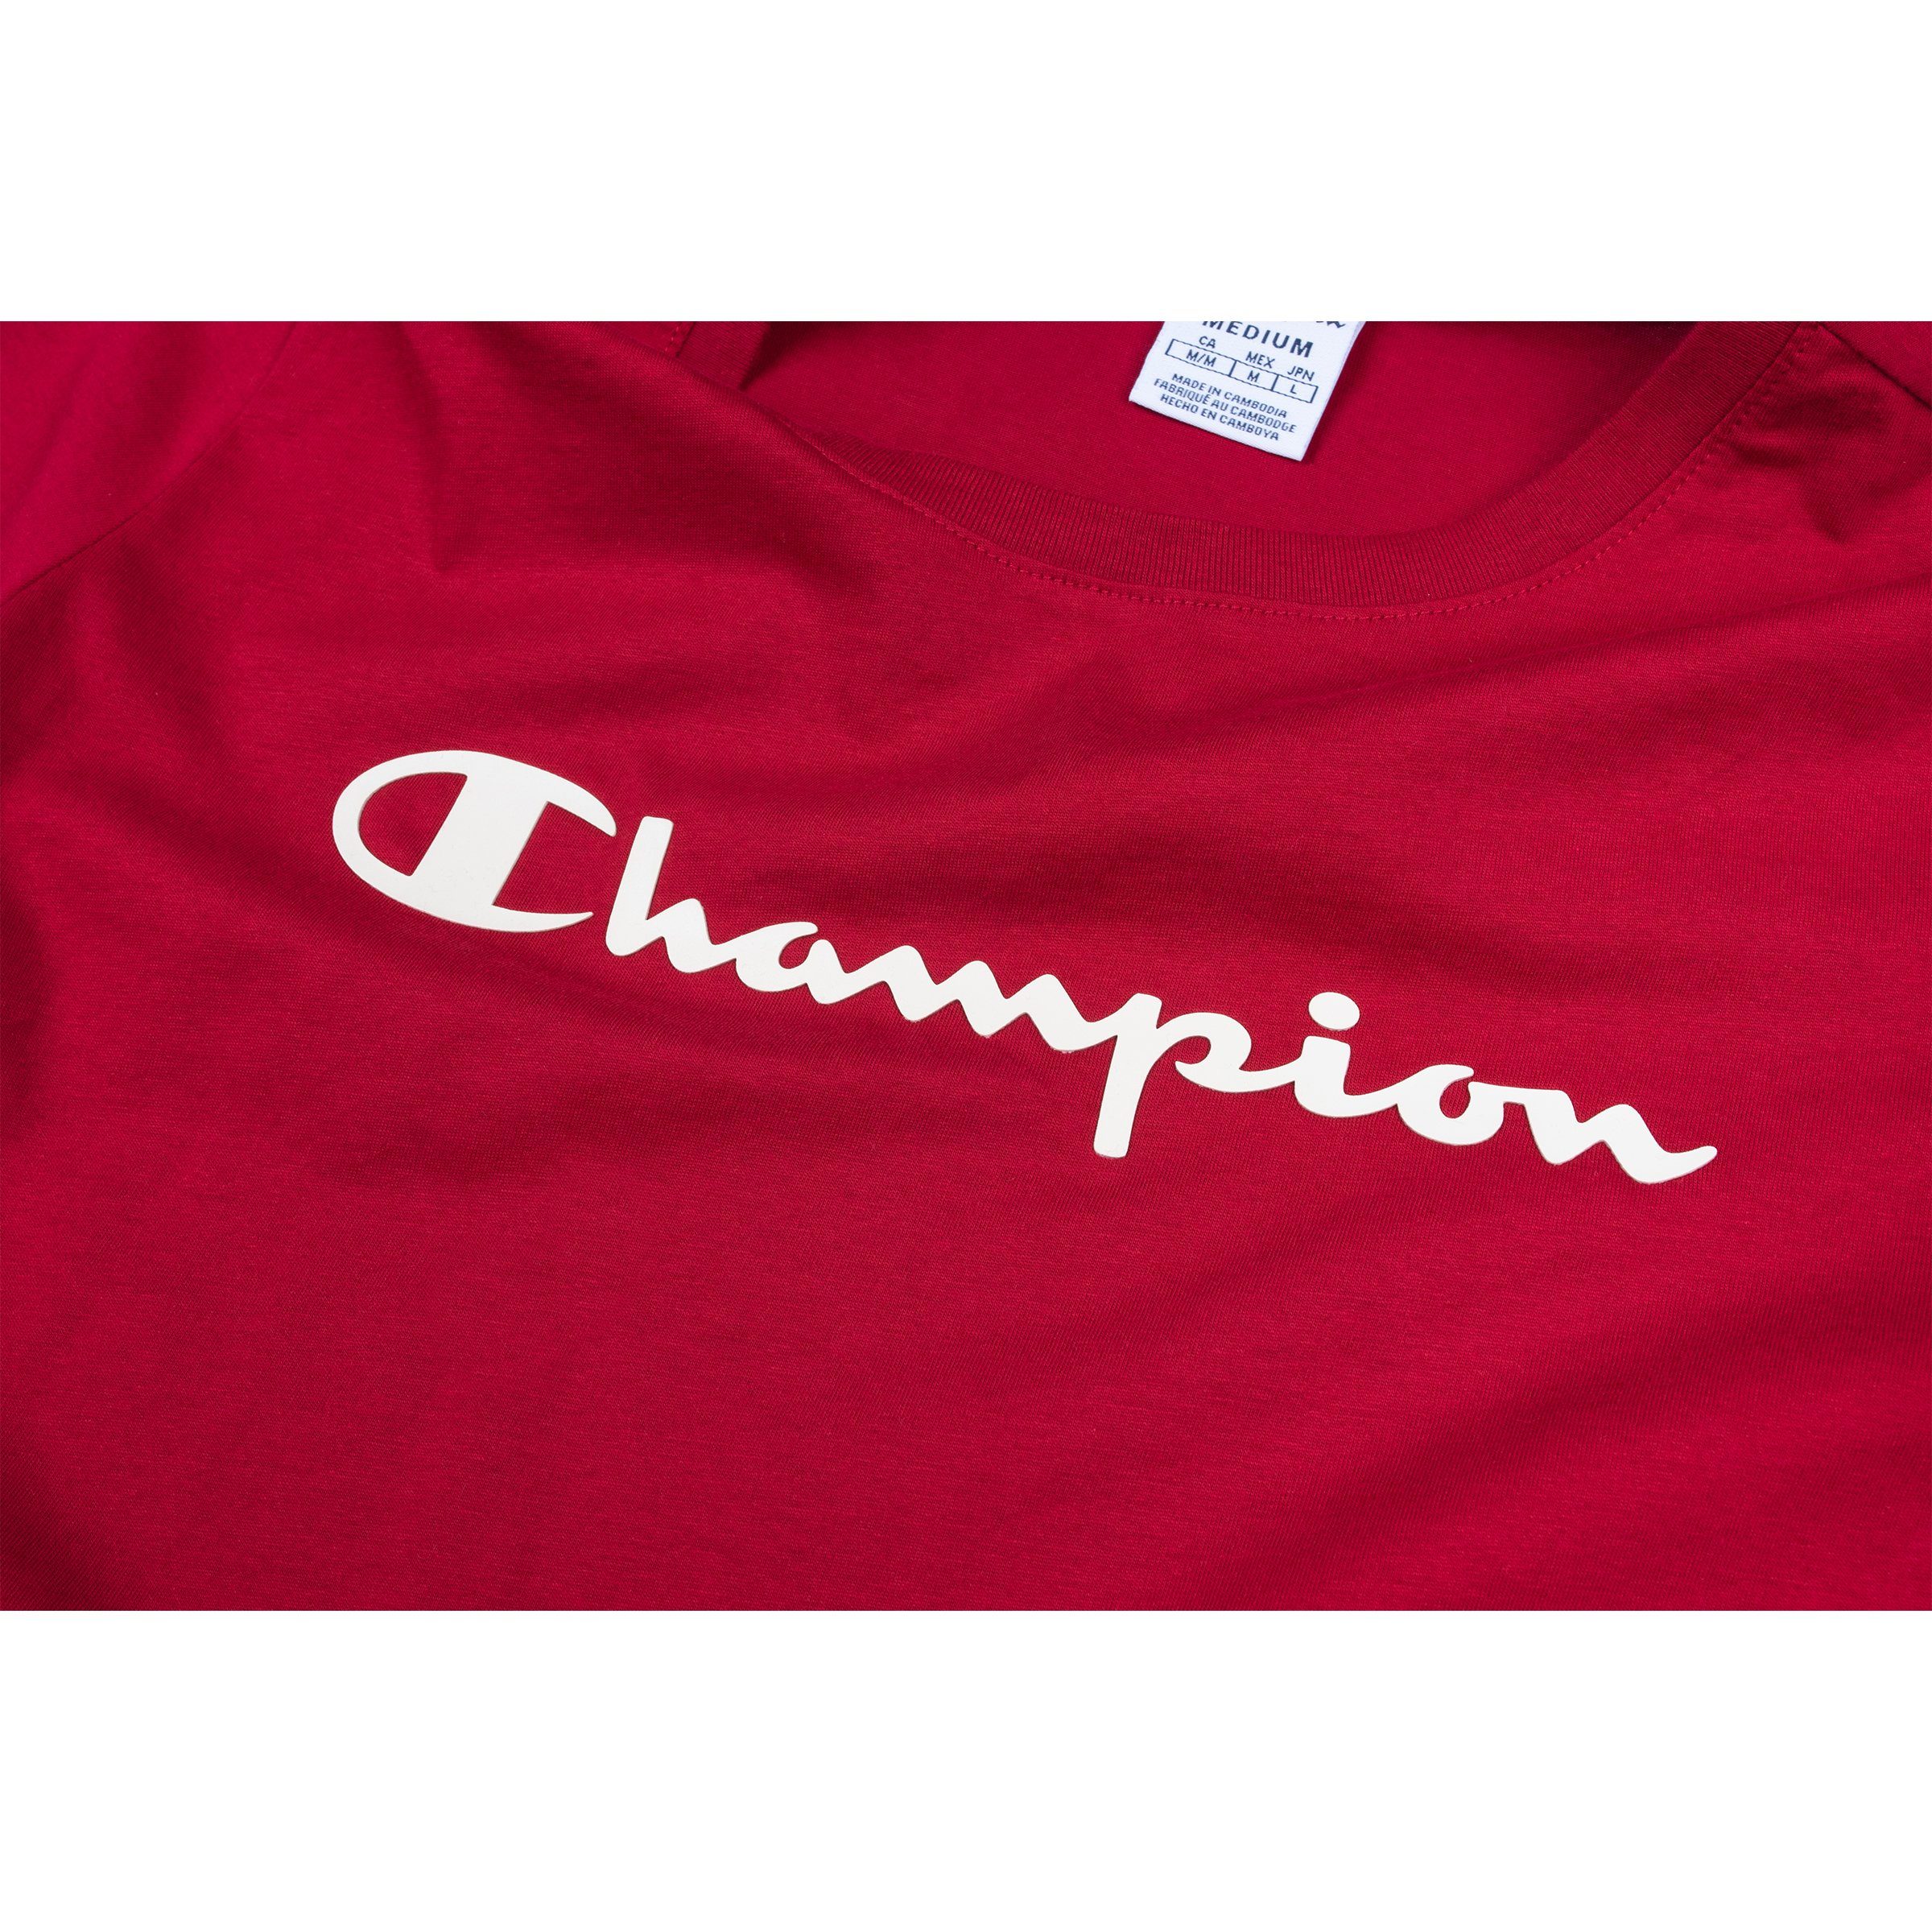 Champion T-Shirt T-Shirt Champion Crewneck (cmr) Adult 113223 Damen T-Shirt rot